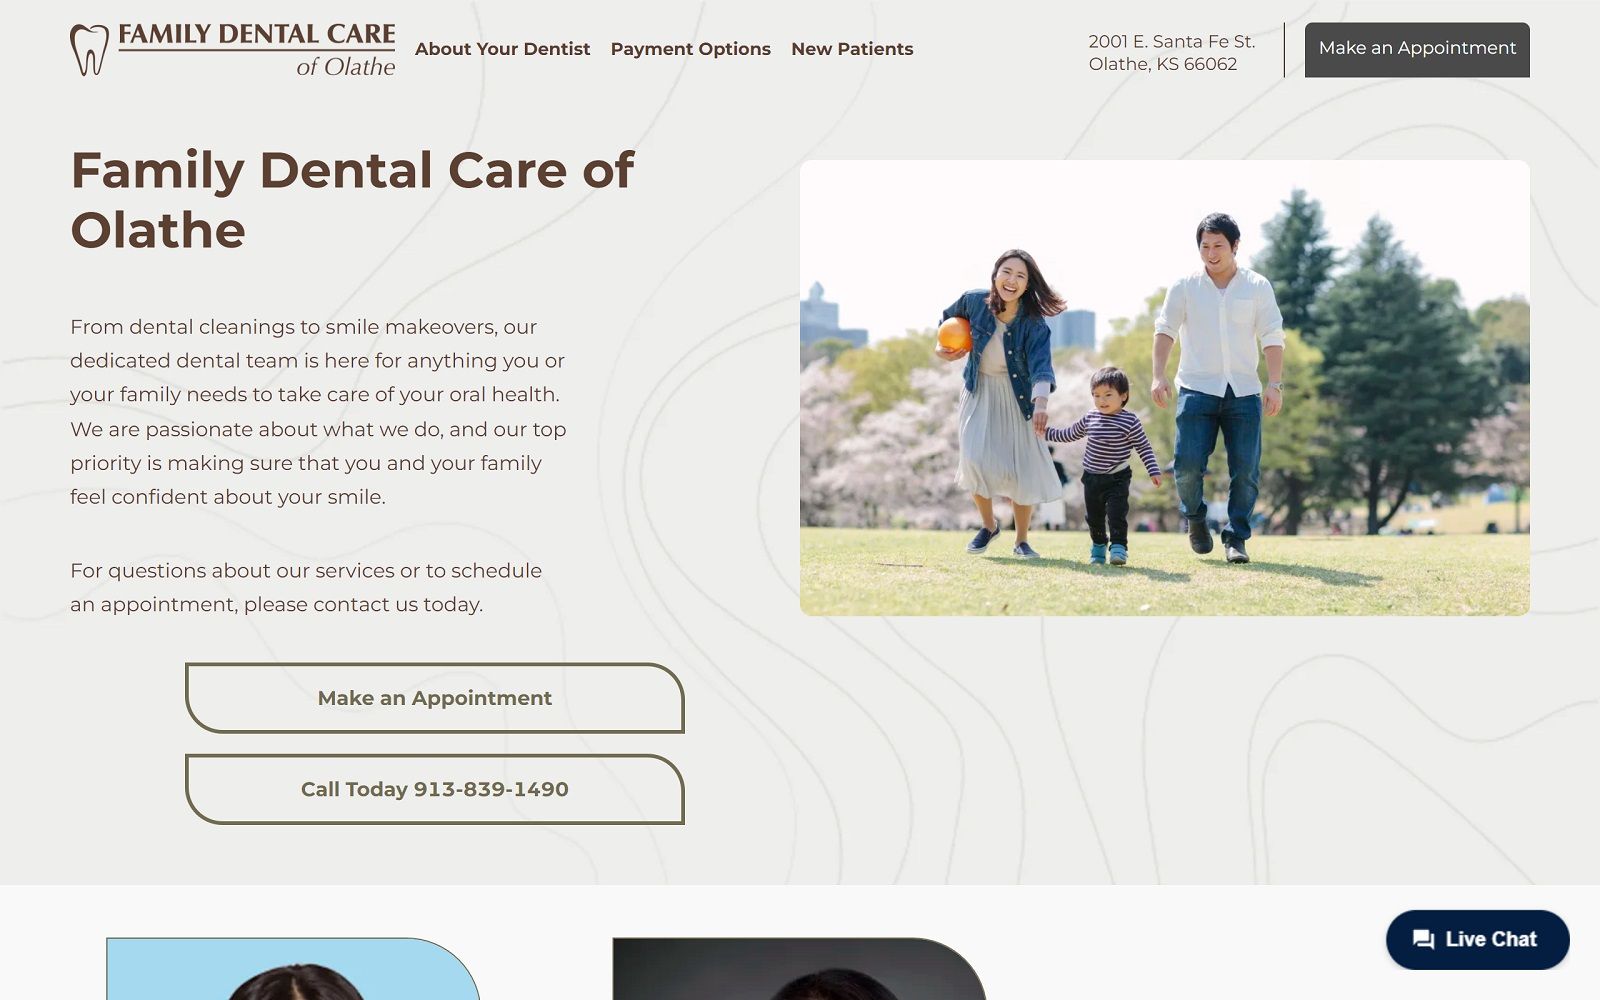 The Screenshot of Family Dental Care of Olathe familydentalcareofolathe.com Website